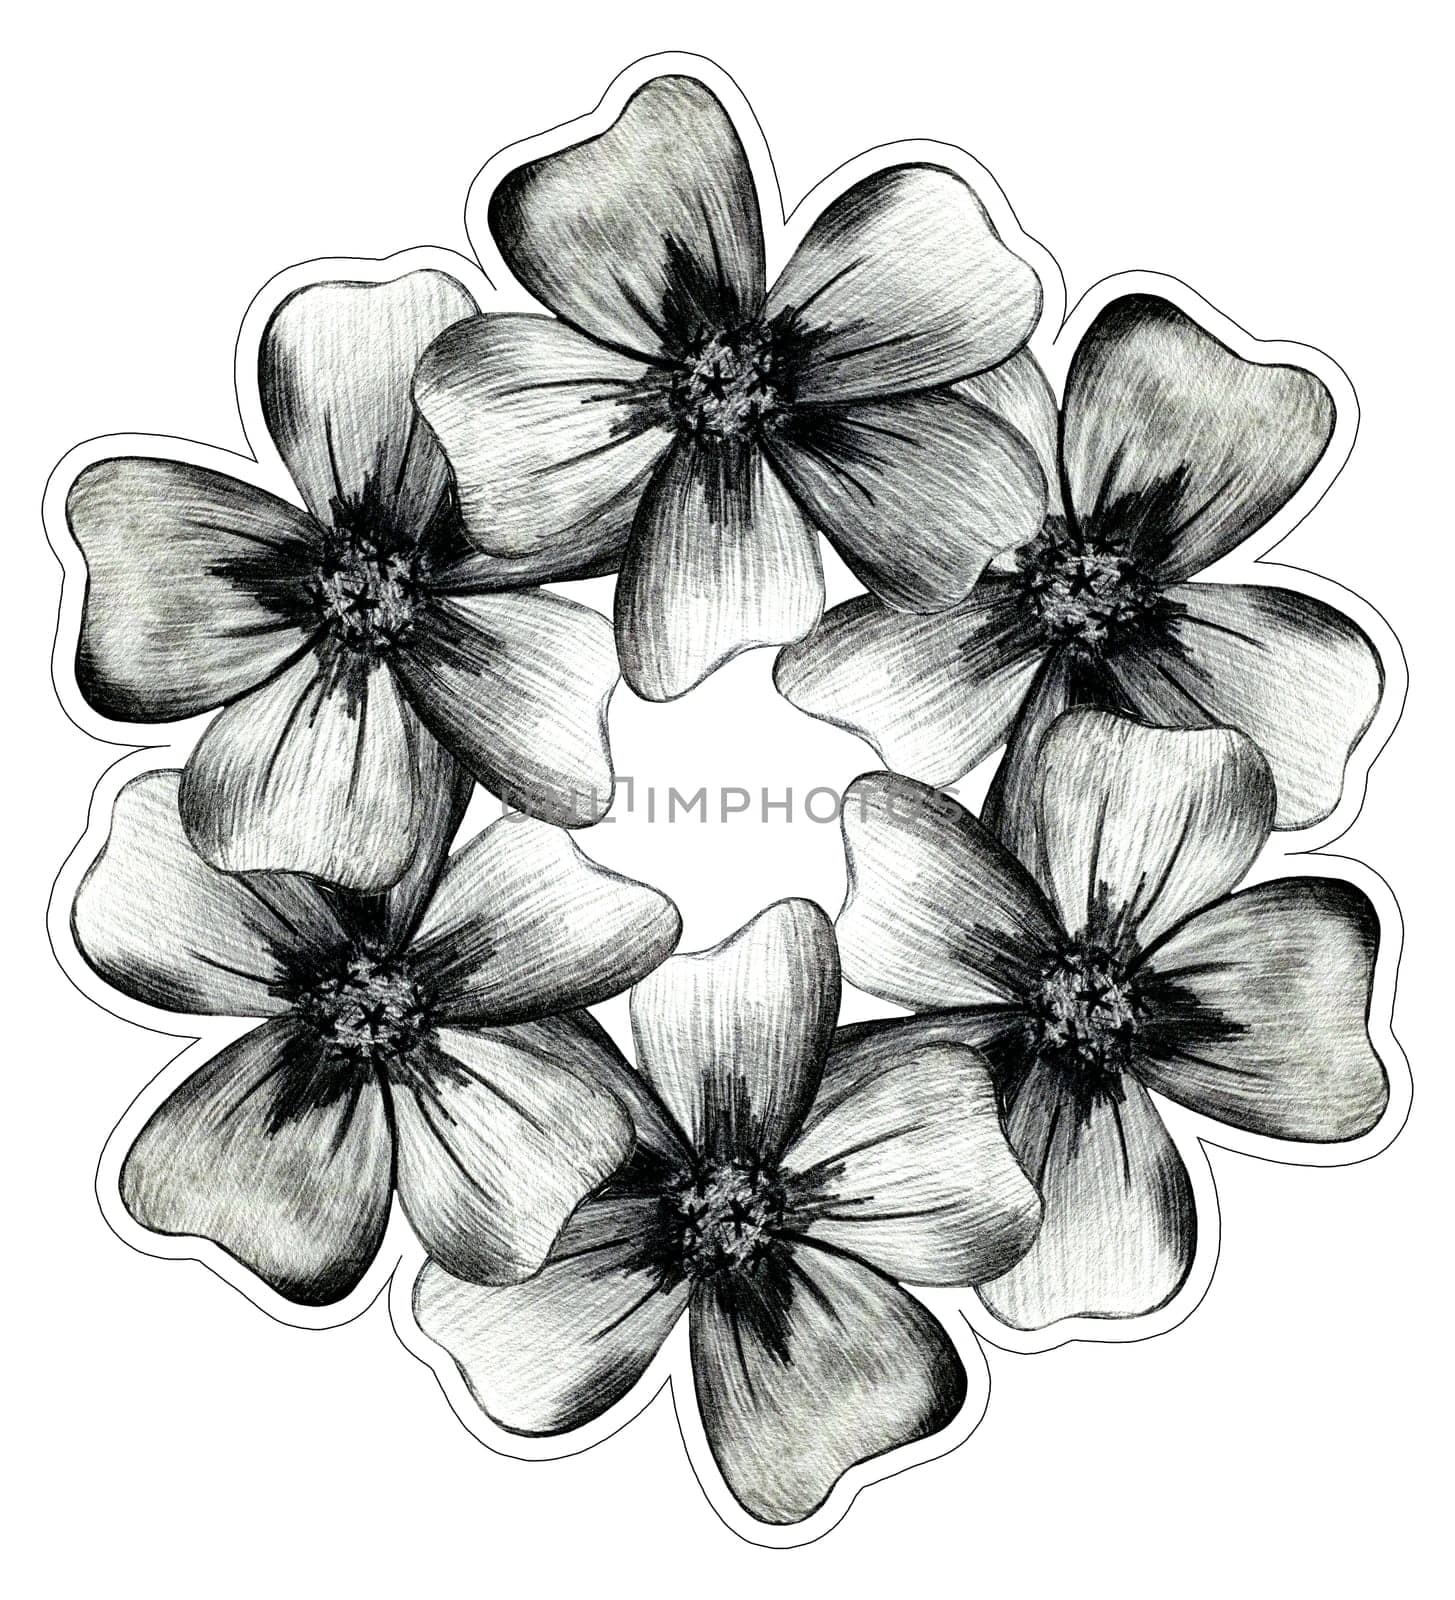 Black and White Hand Drawn Marigold Flower Round Composition. by Rina_Dozornaya